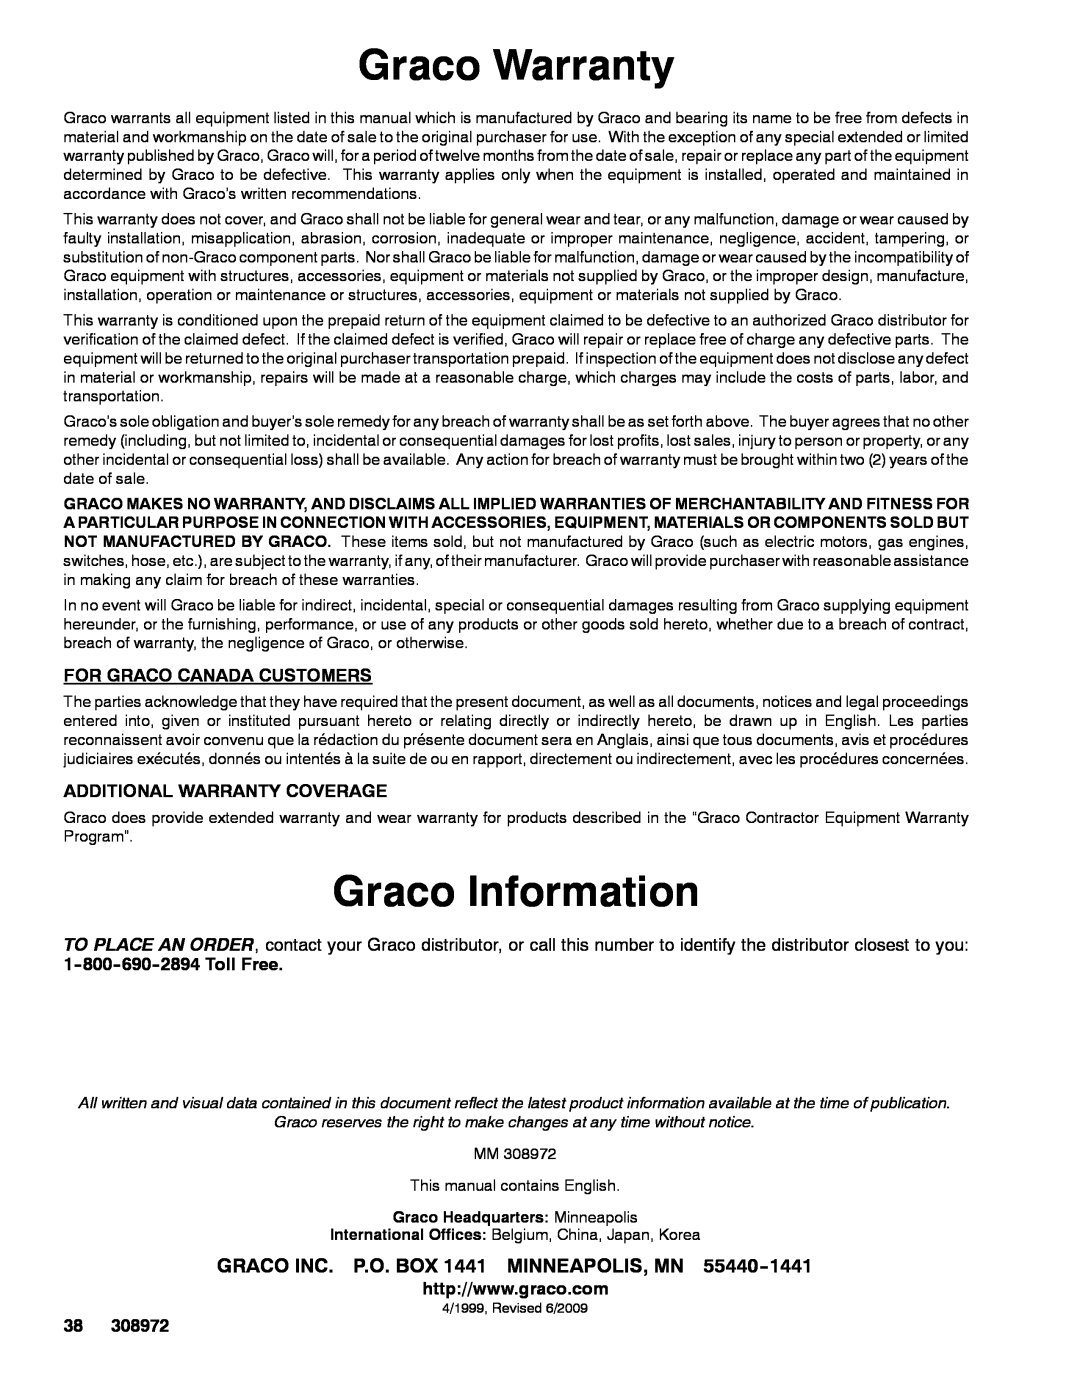 Graco Inc 965165 Graco Warranty, Graco Information, For Graco Canada Customers, Additional Warranty Coverage, Toll Free 